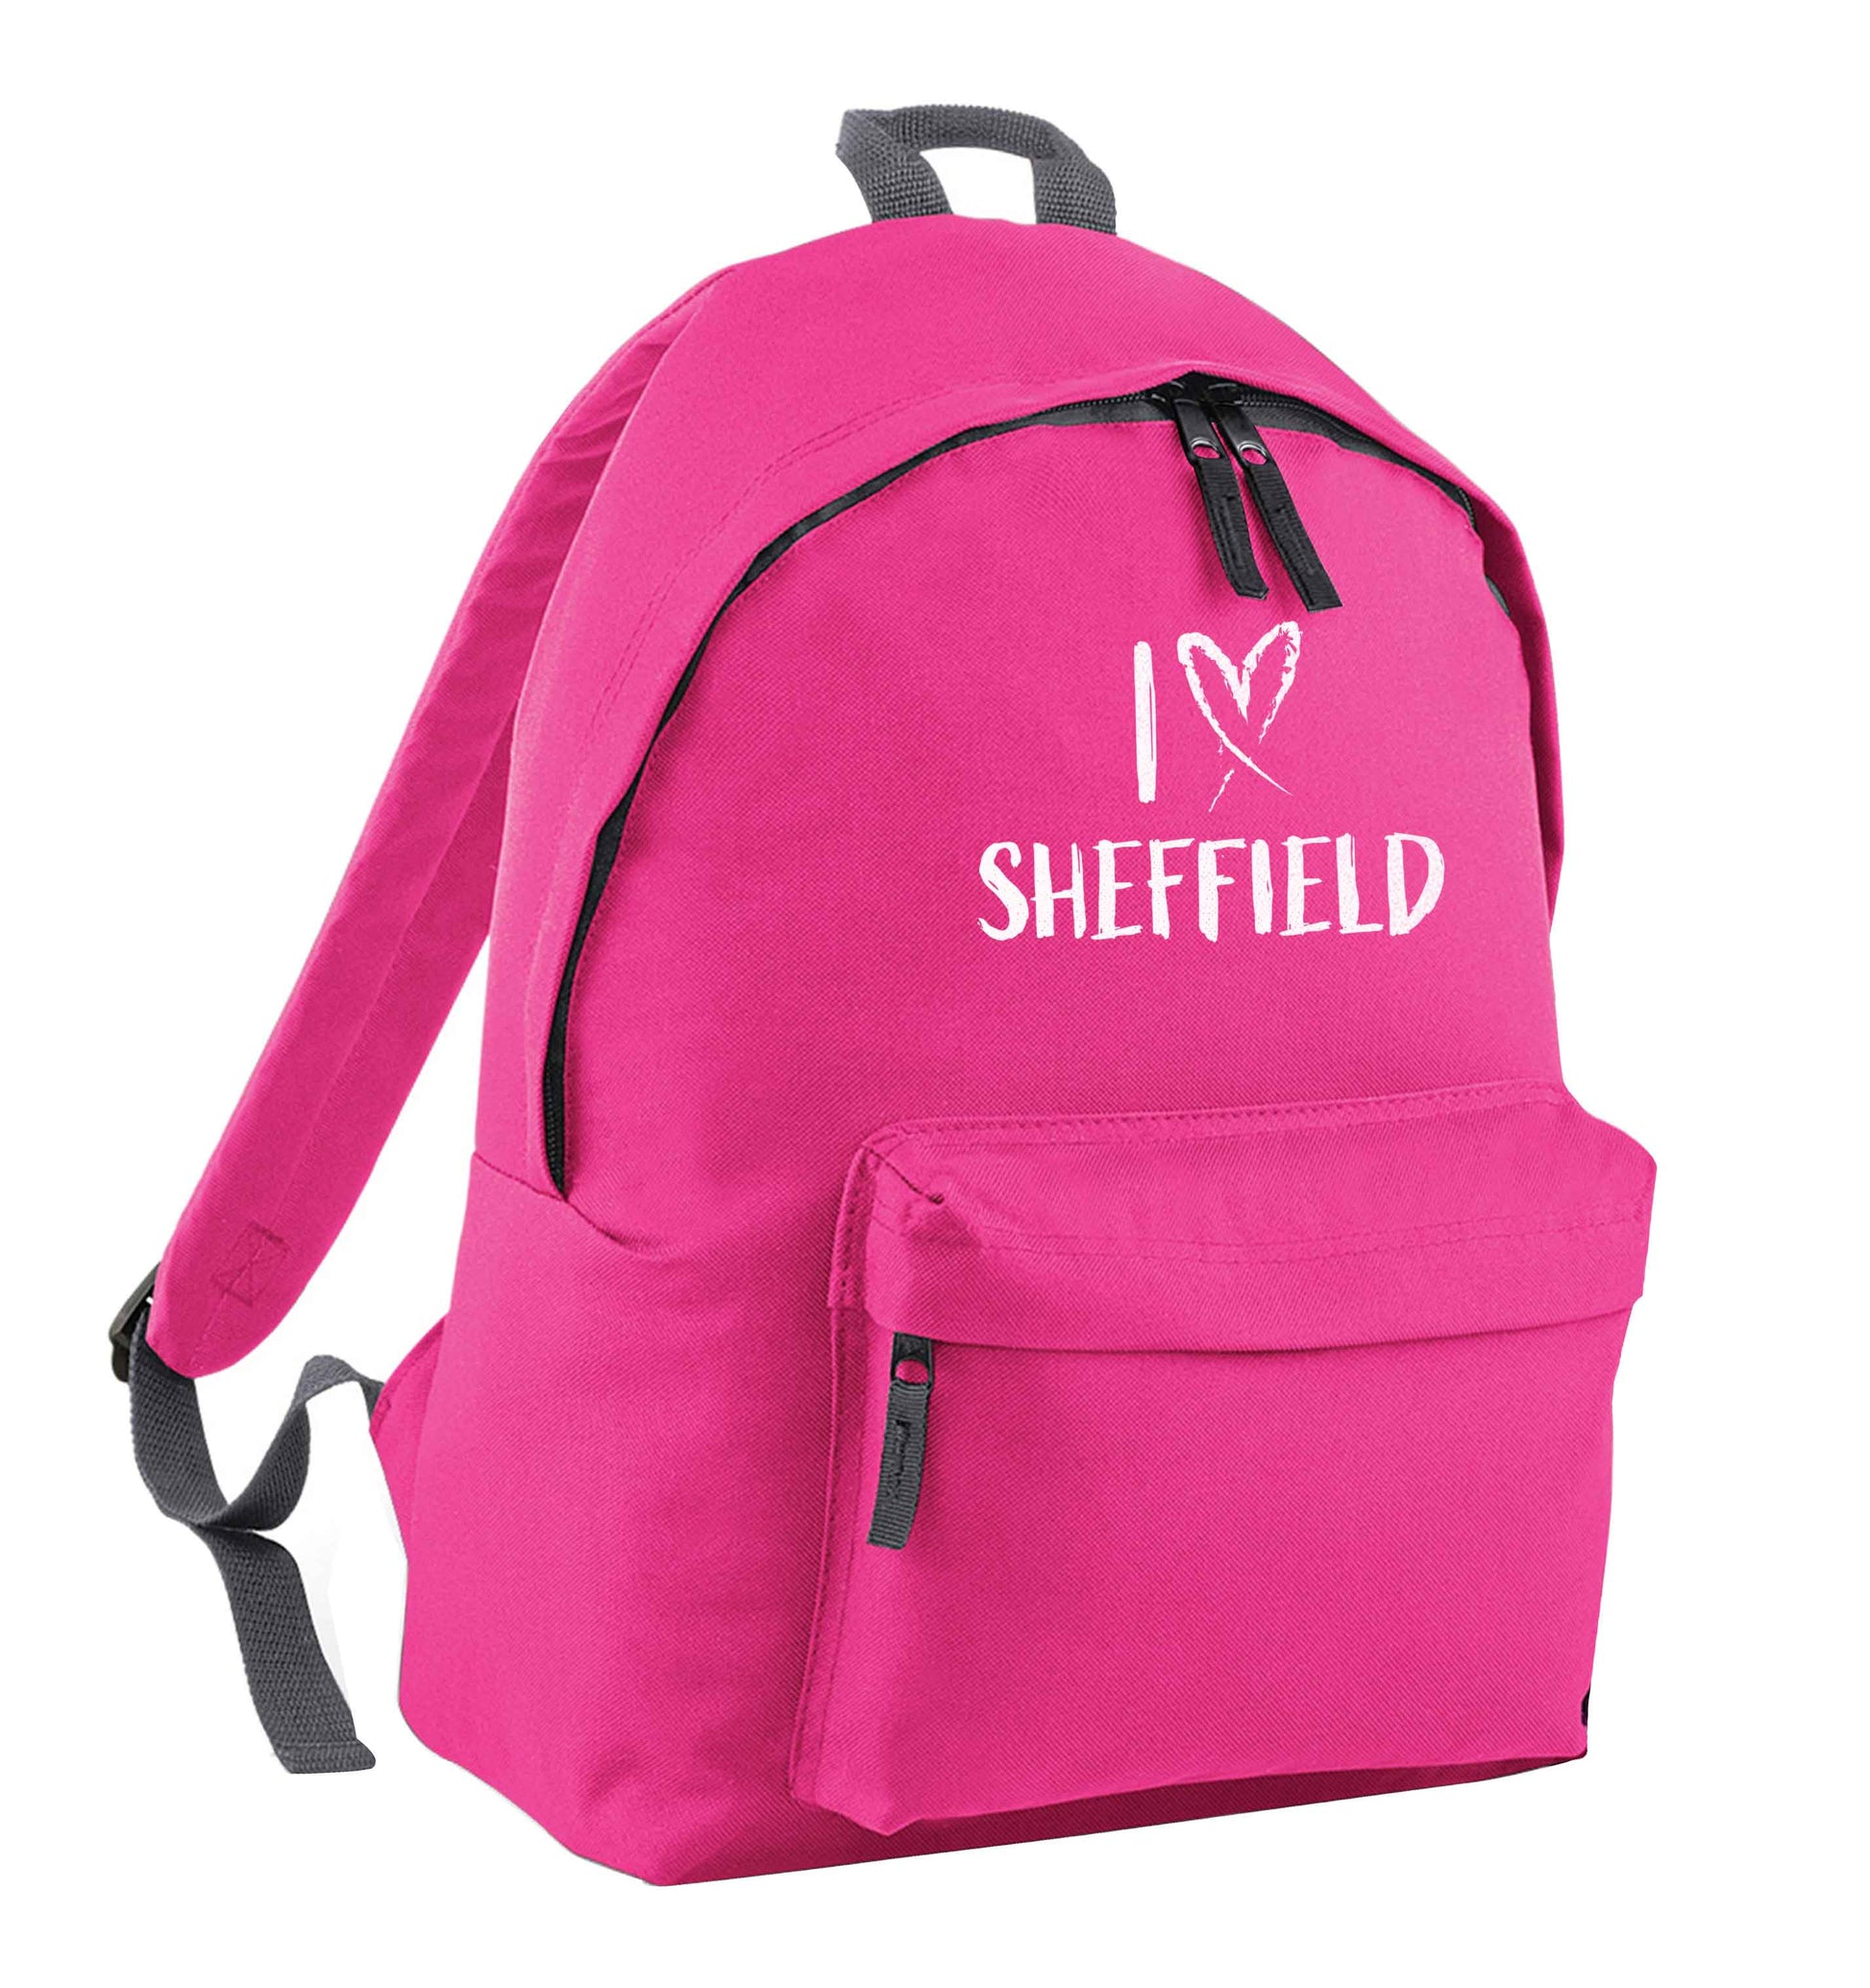 I love Sheffield pink children's backpack